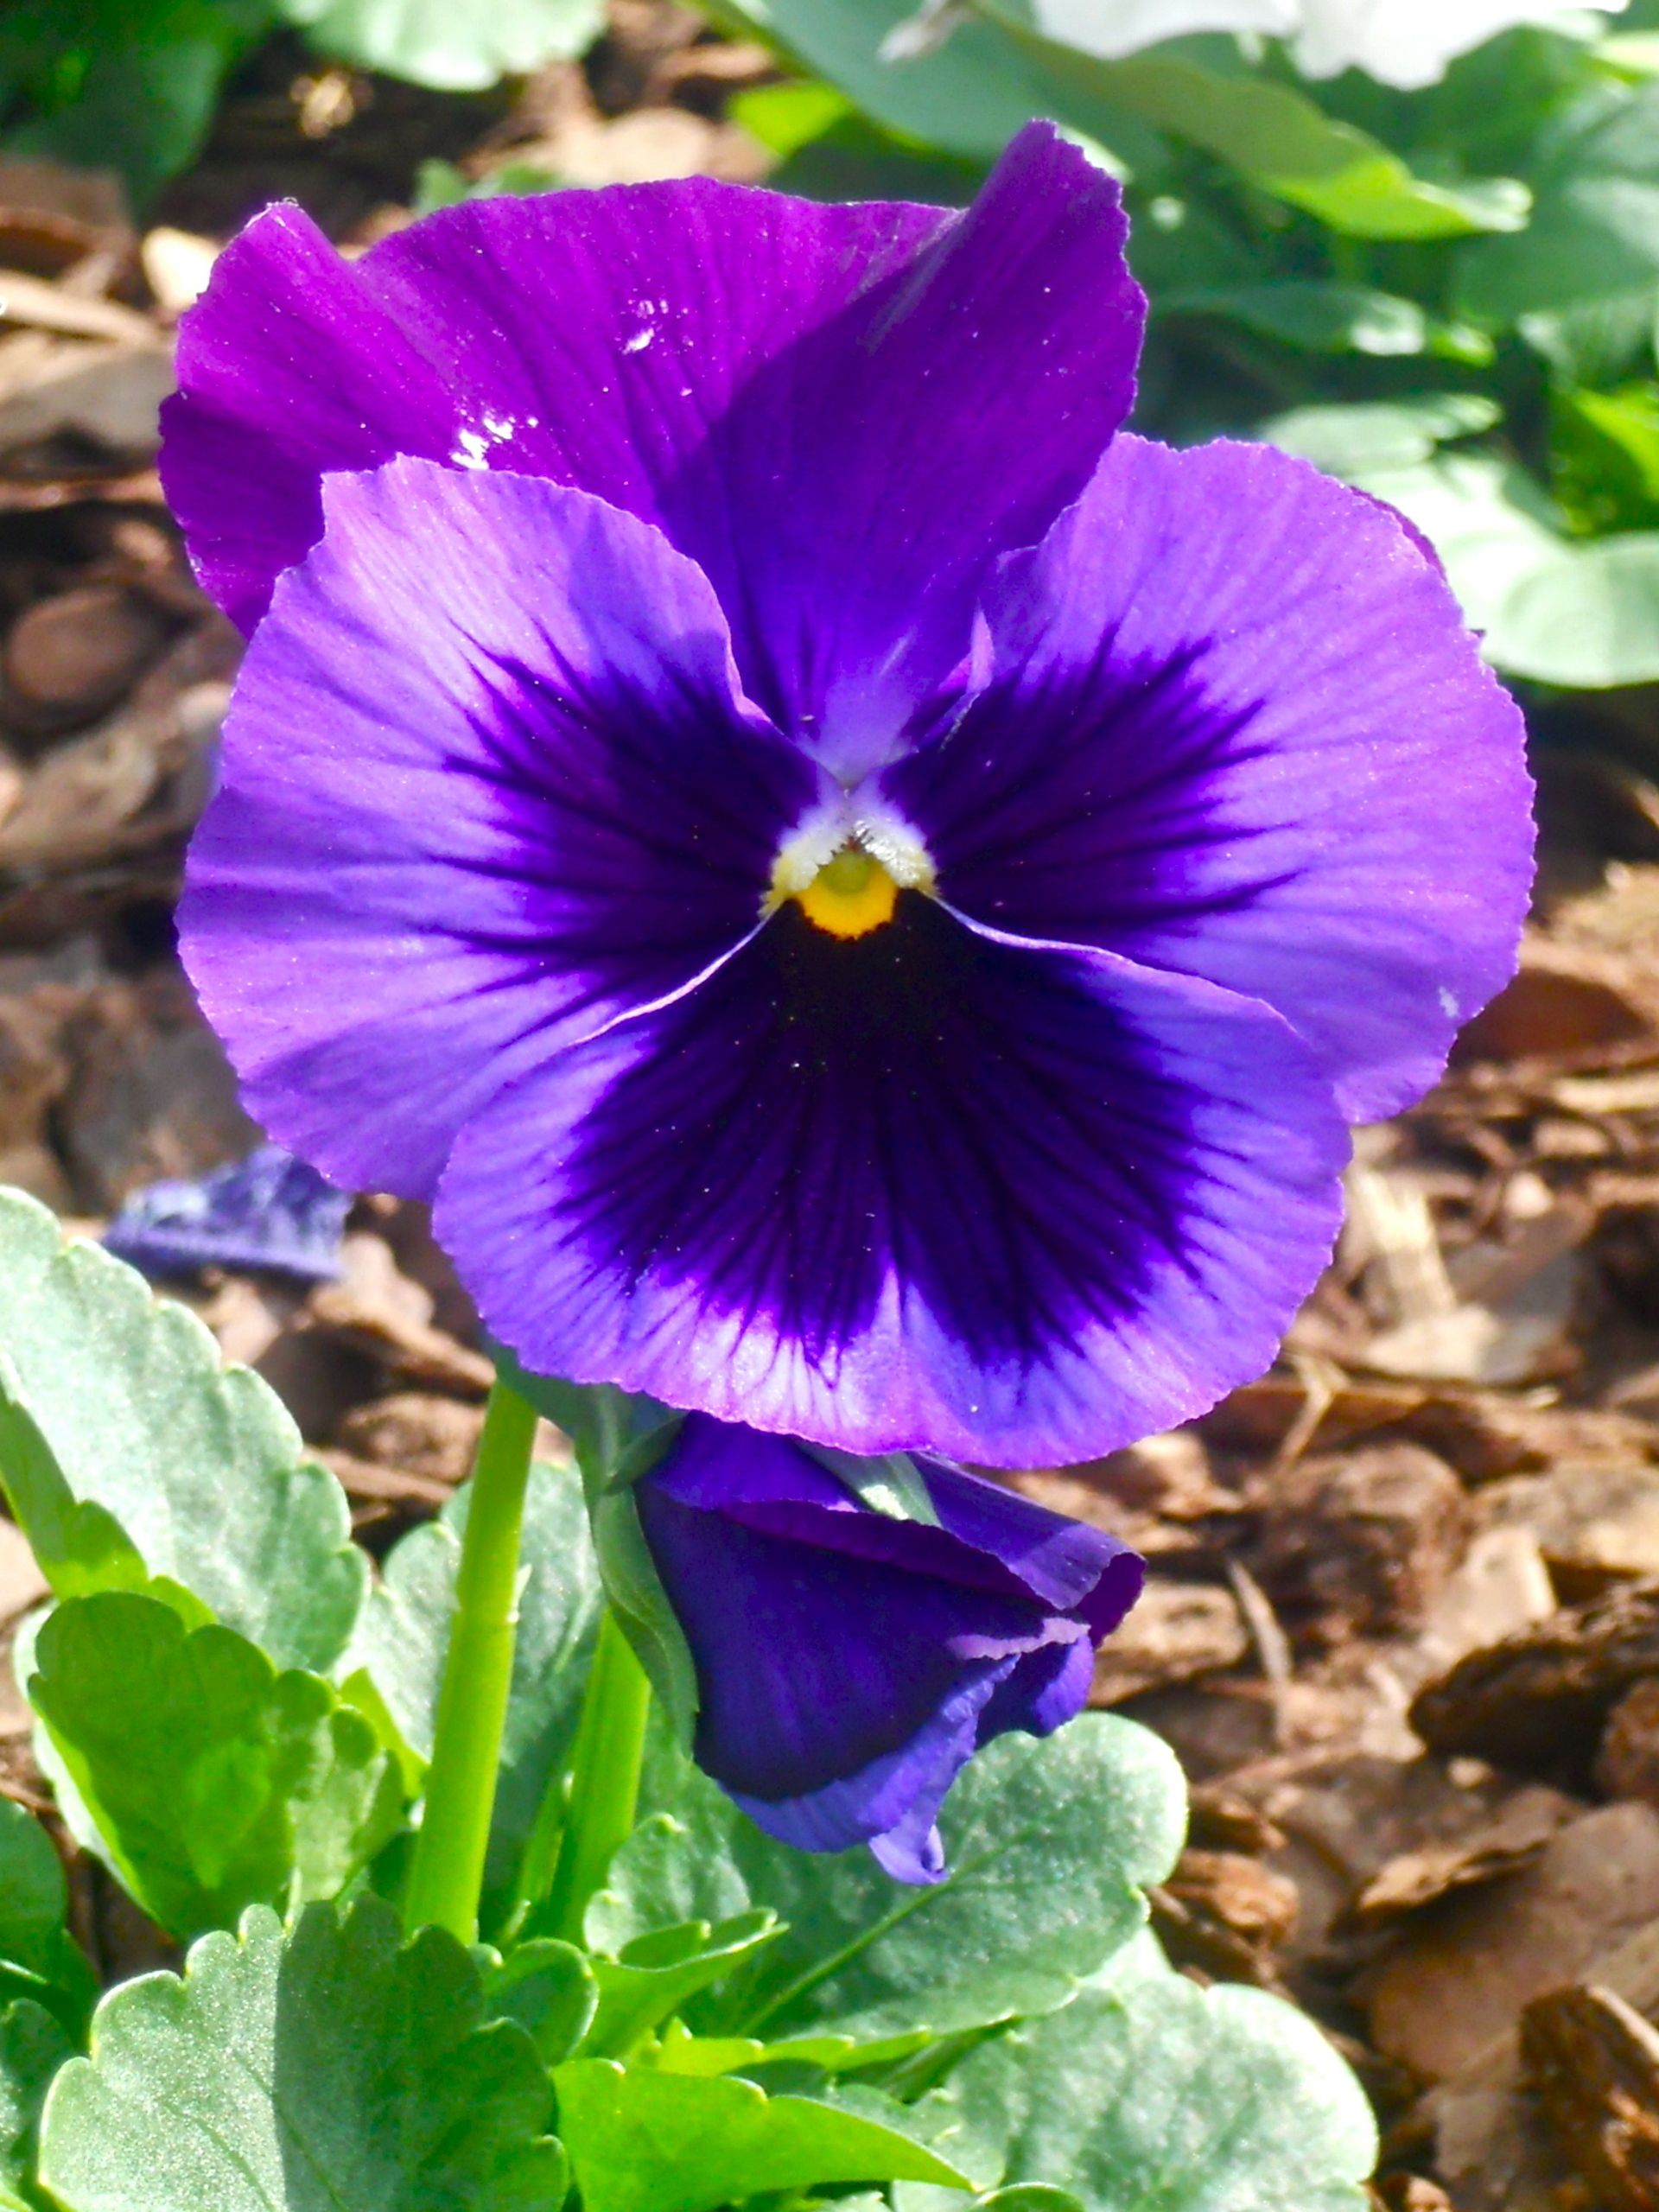 beautiful pansies | Gardening Beautiful Purple Pansy | My favorite ...